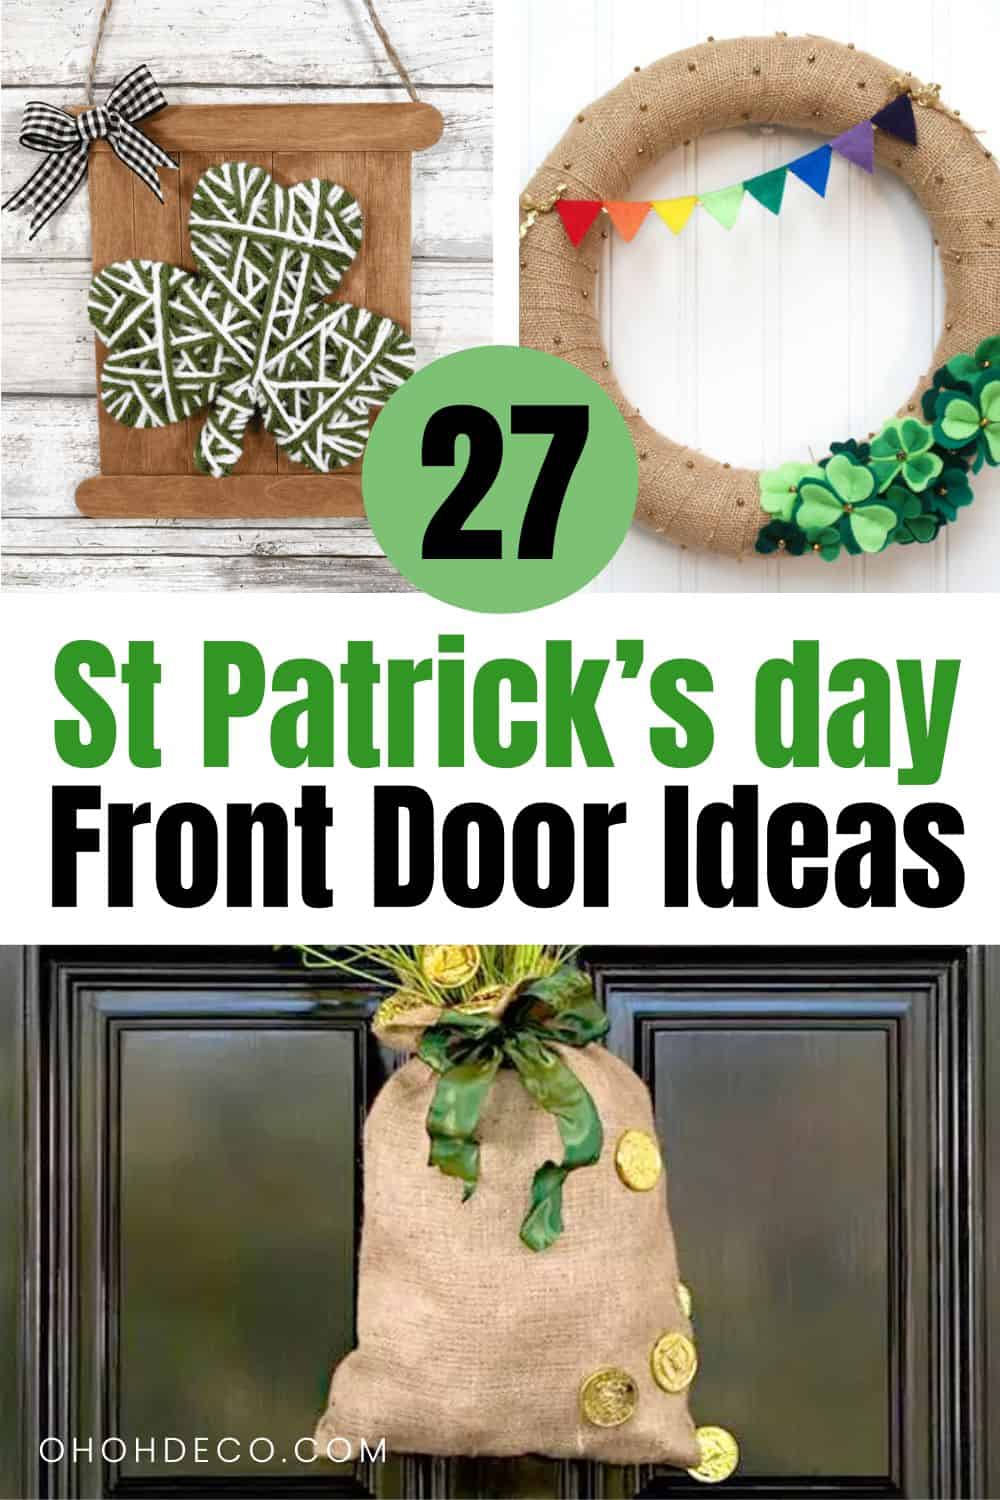 St Patrick's day door decorating ideas